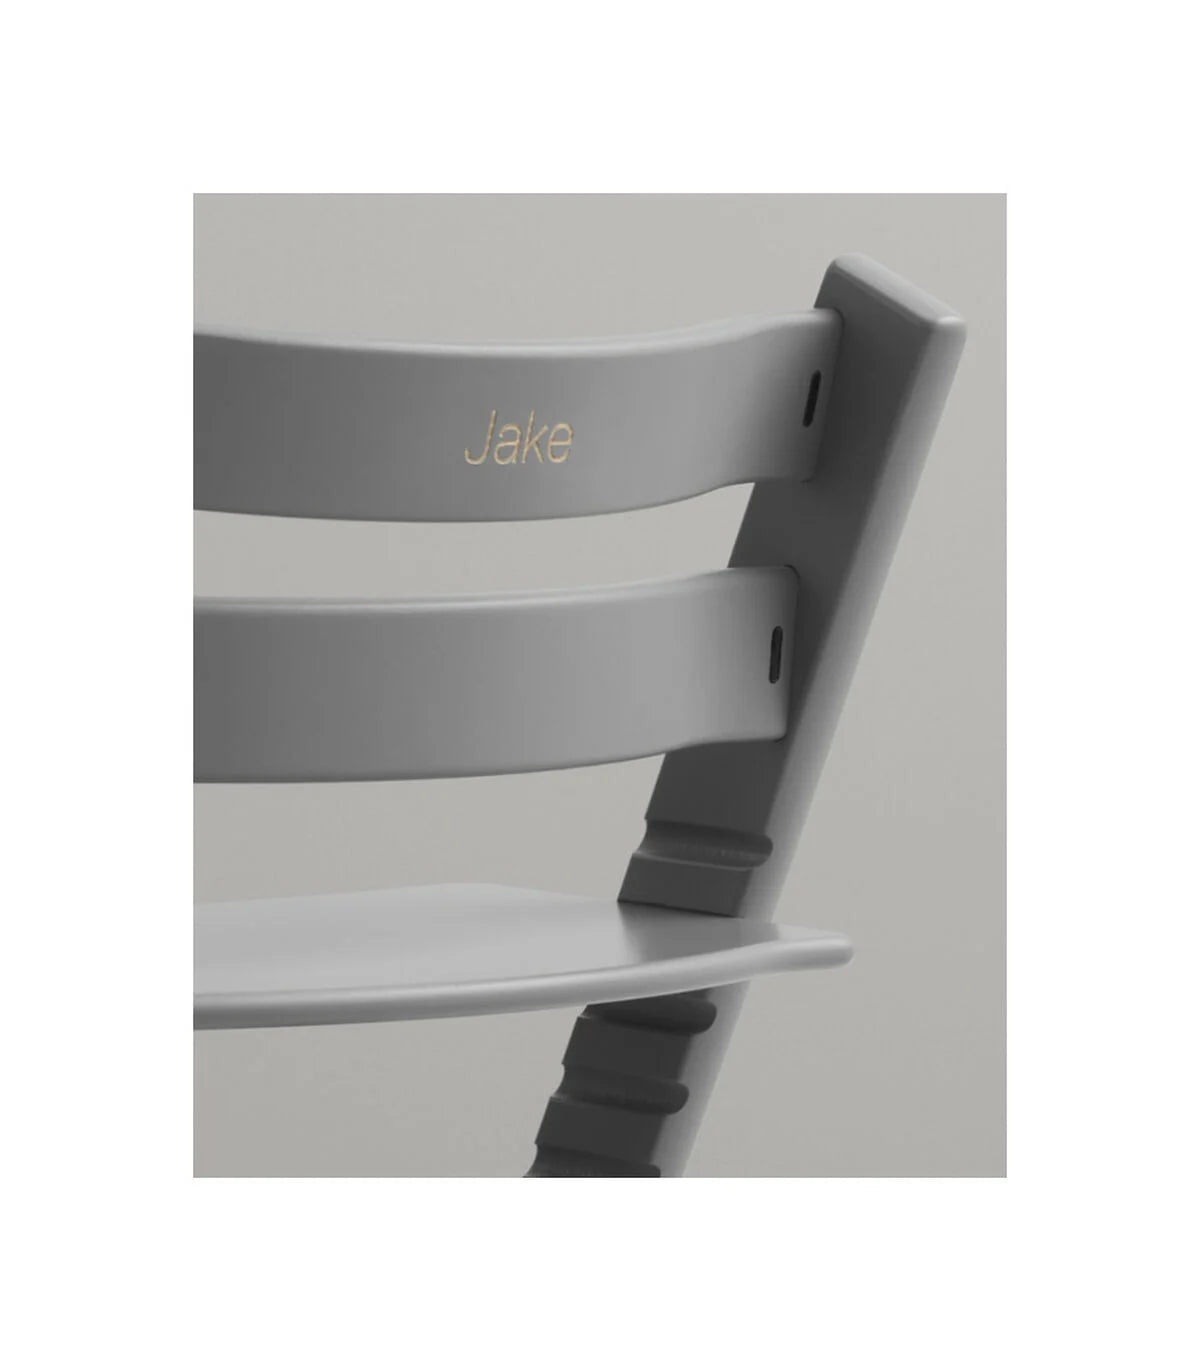 Tripp Trapp® Chair Storm Grey